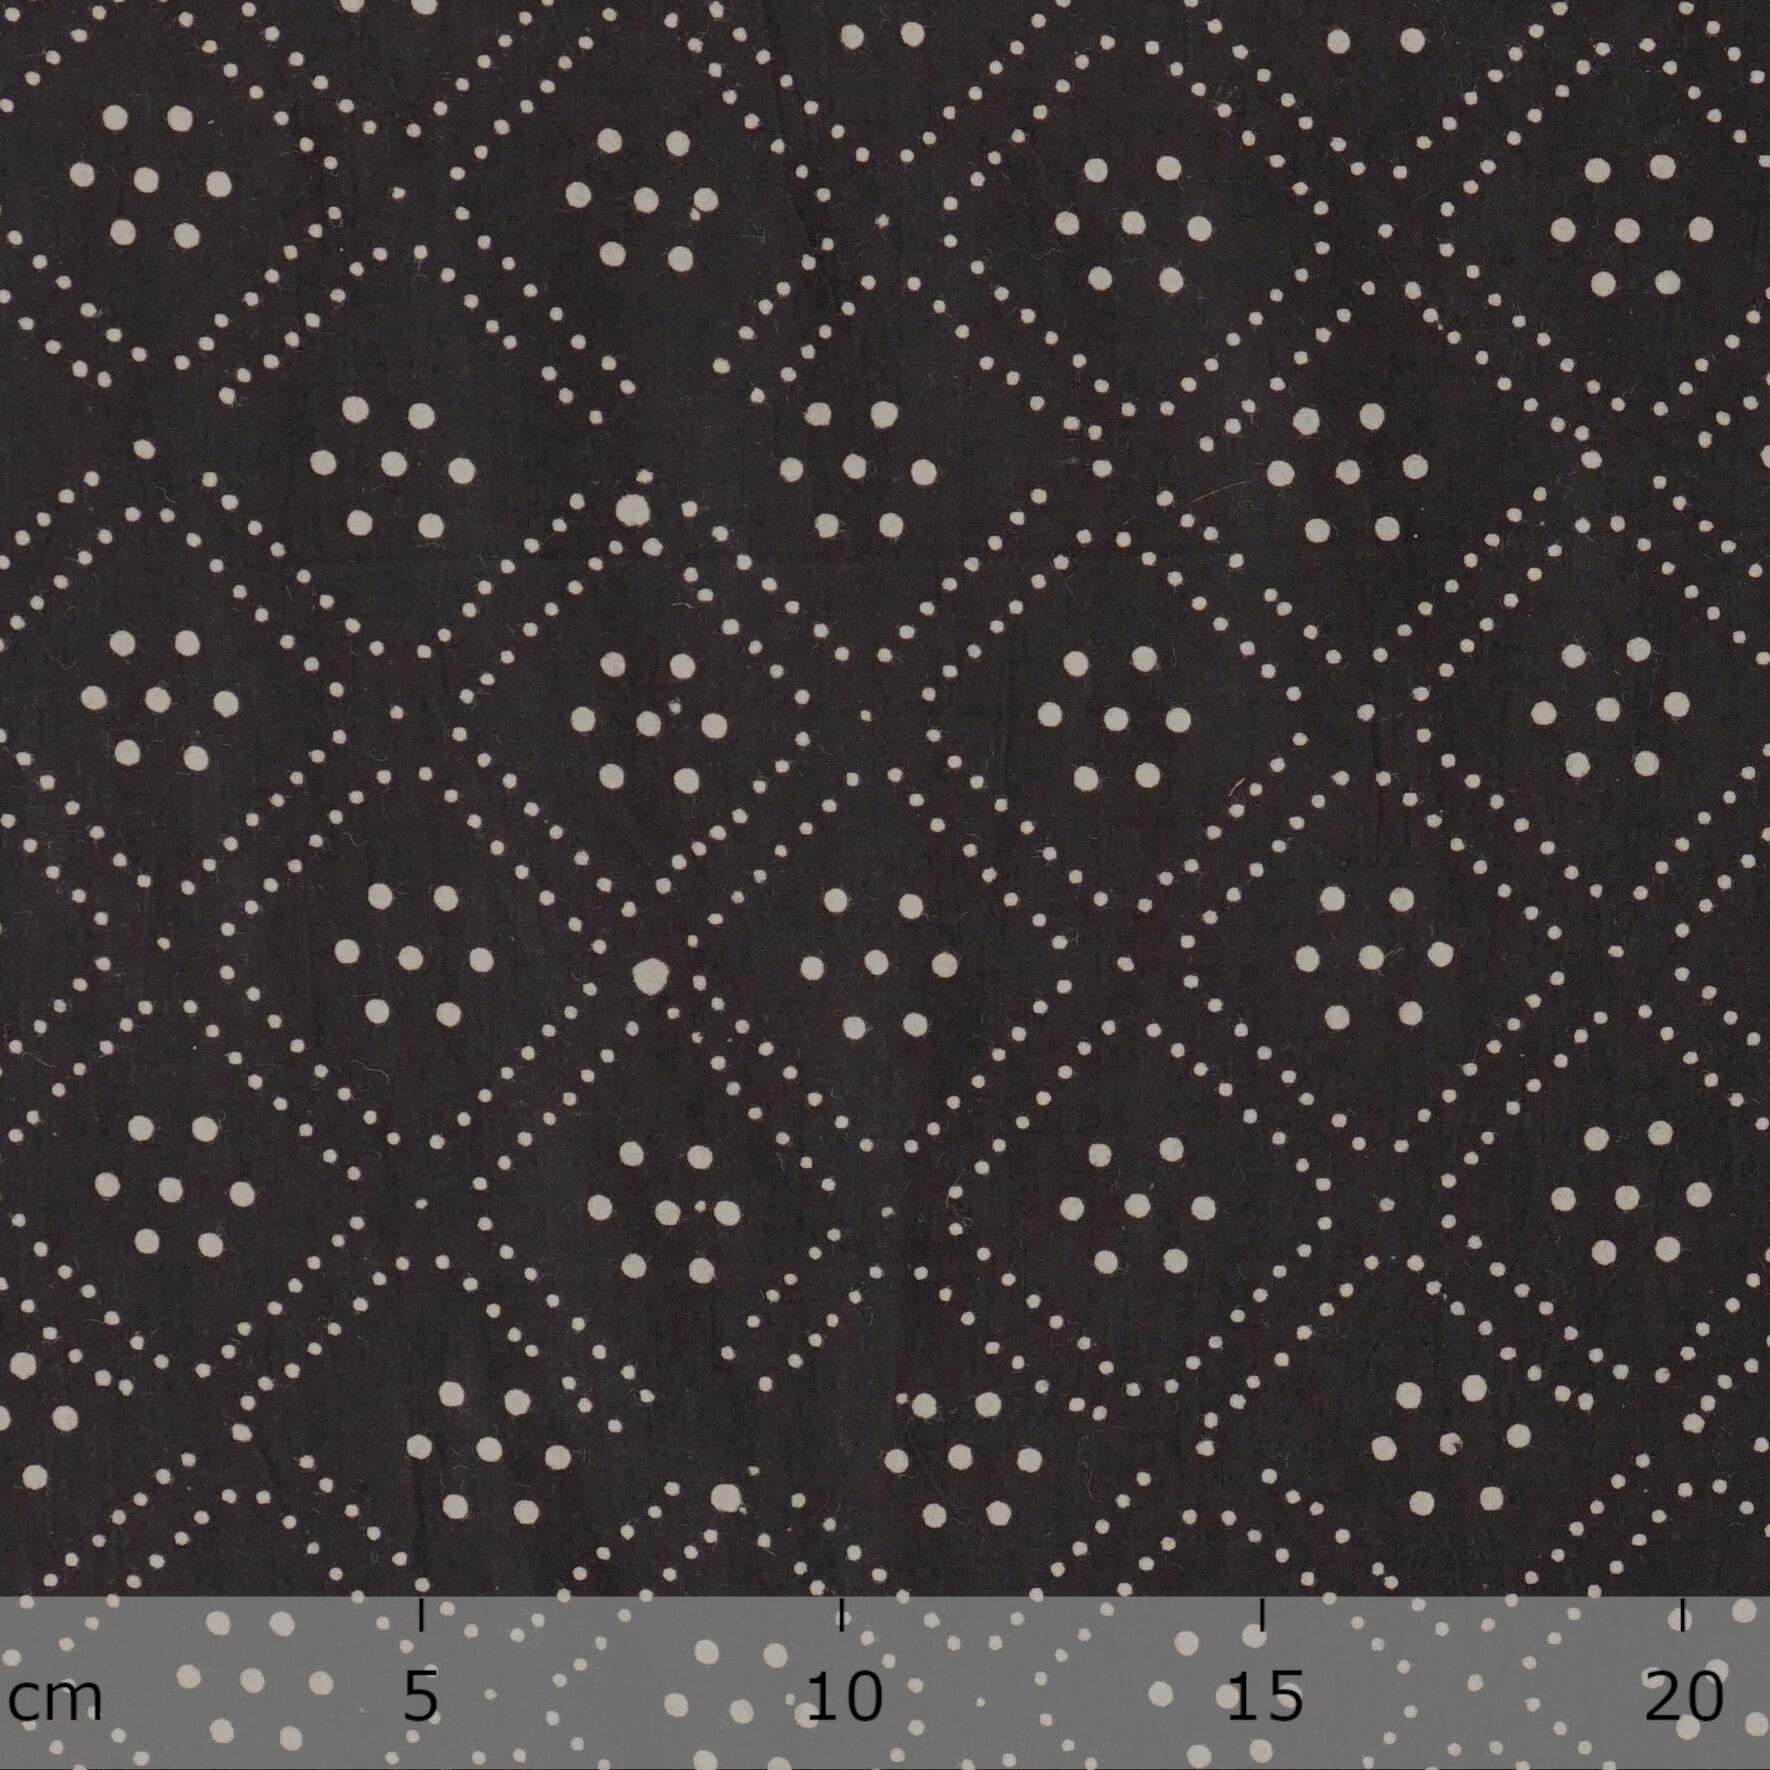 AHM24 - Block Printed Fabric, 100% Cotton, Ajrak Design / Black Diamond Dots. Ruler